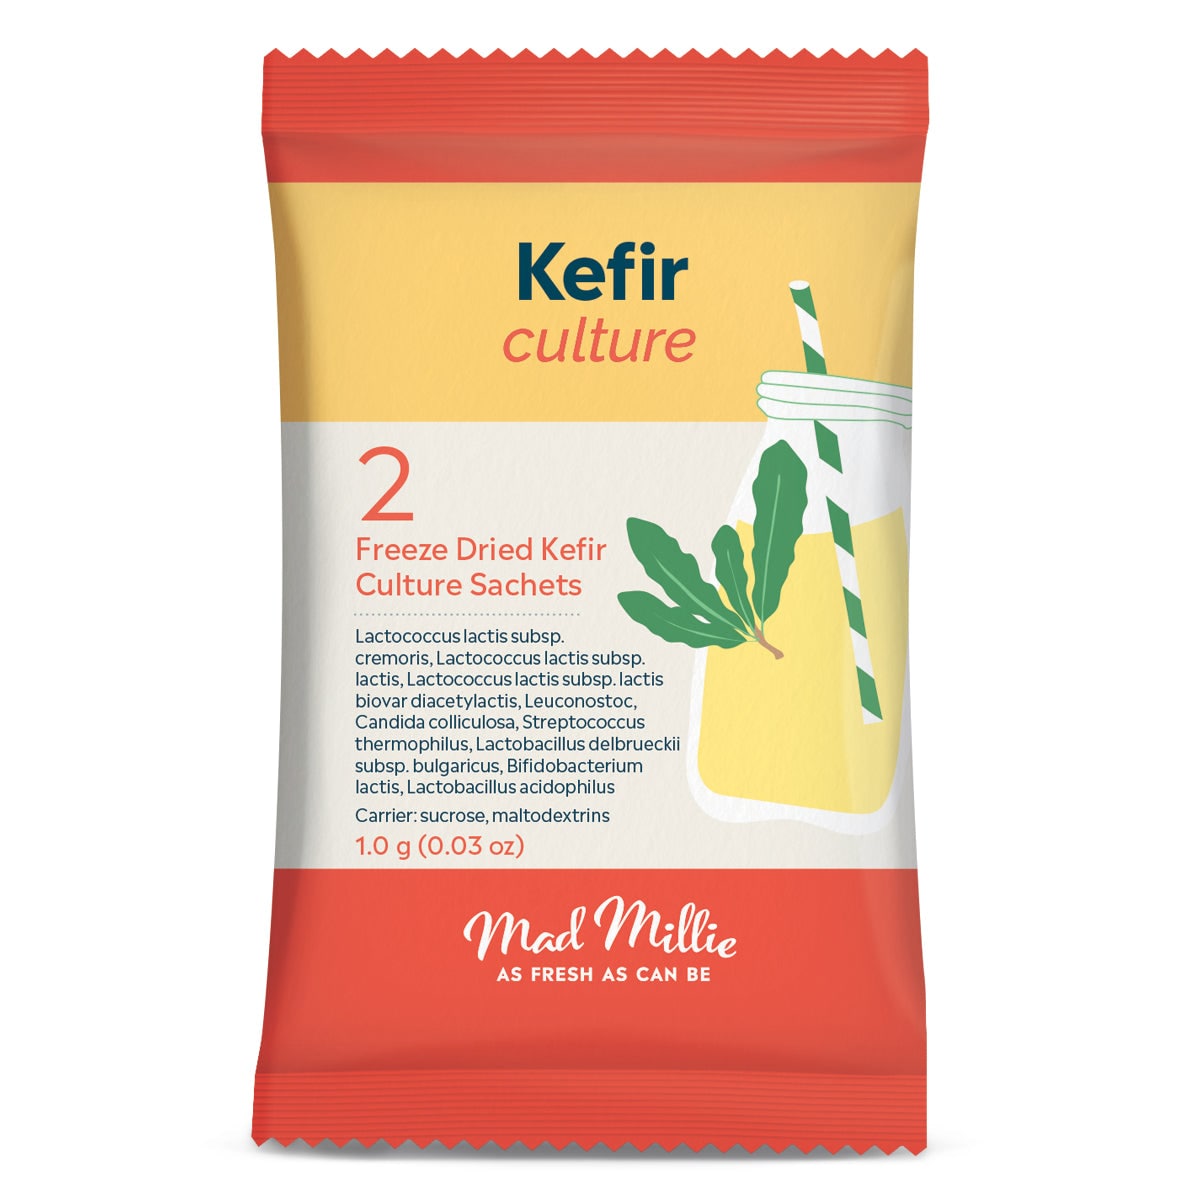 Mad Millie Kefir Culture Kit